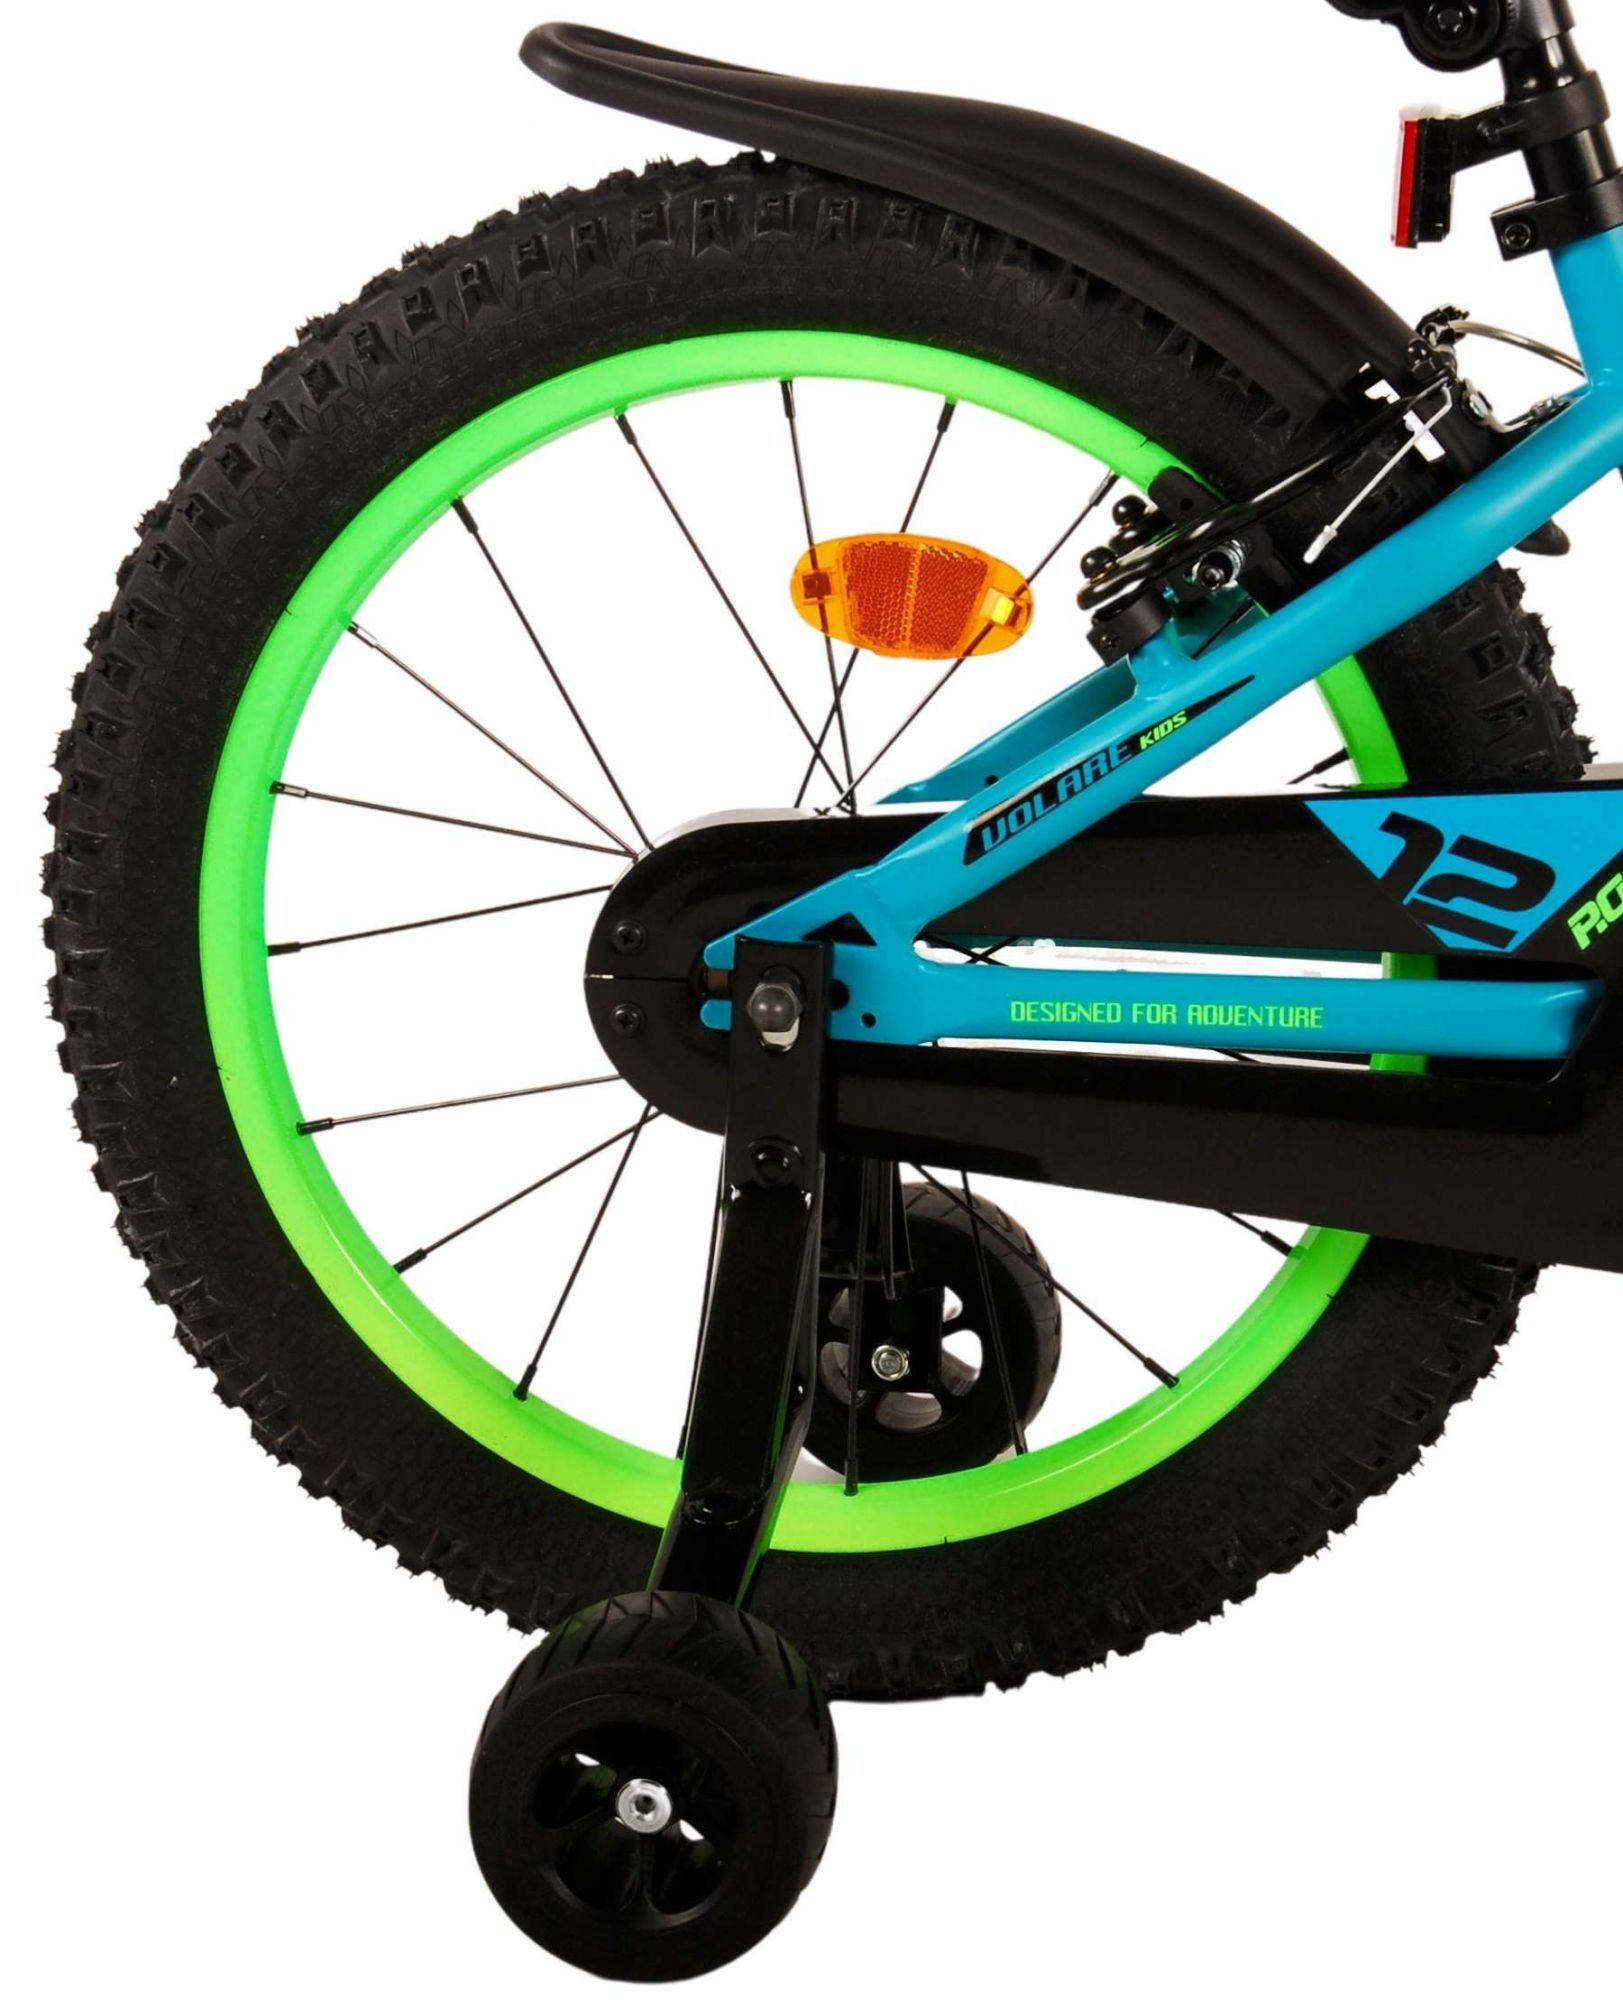 Blau Jungen & Kinderfahrrad - - Grün Handbremse Zoll 18 für LeNoSa Fahrrad Rücktrittbremse 4-7, Alter Adventure